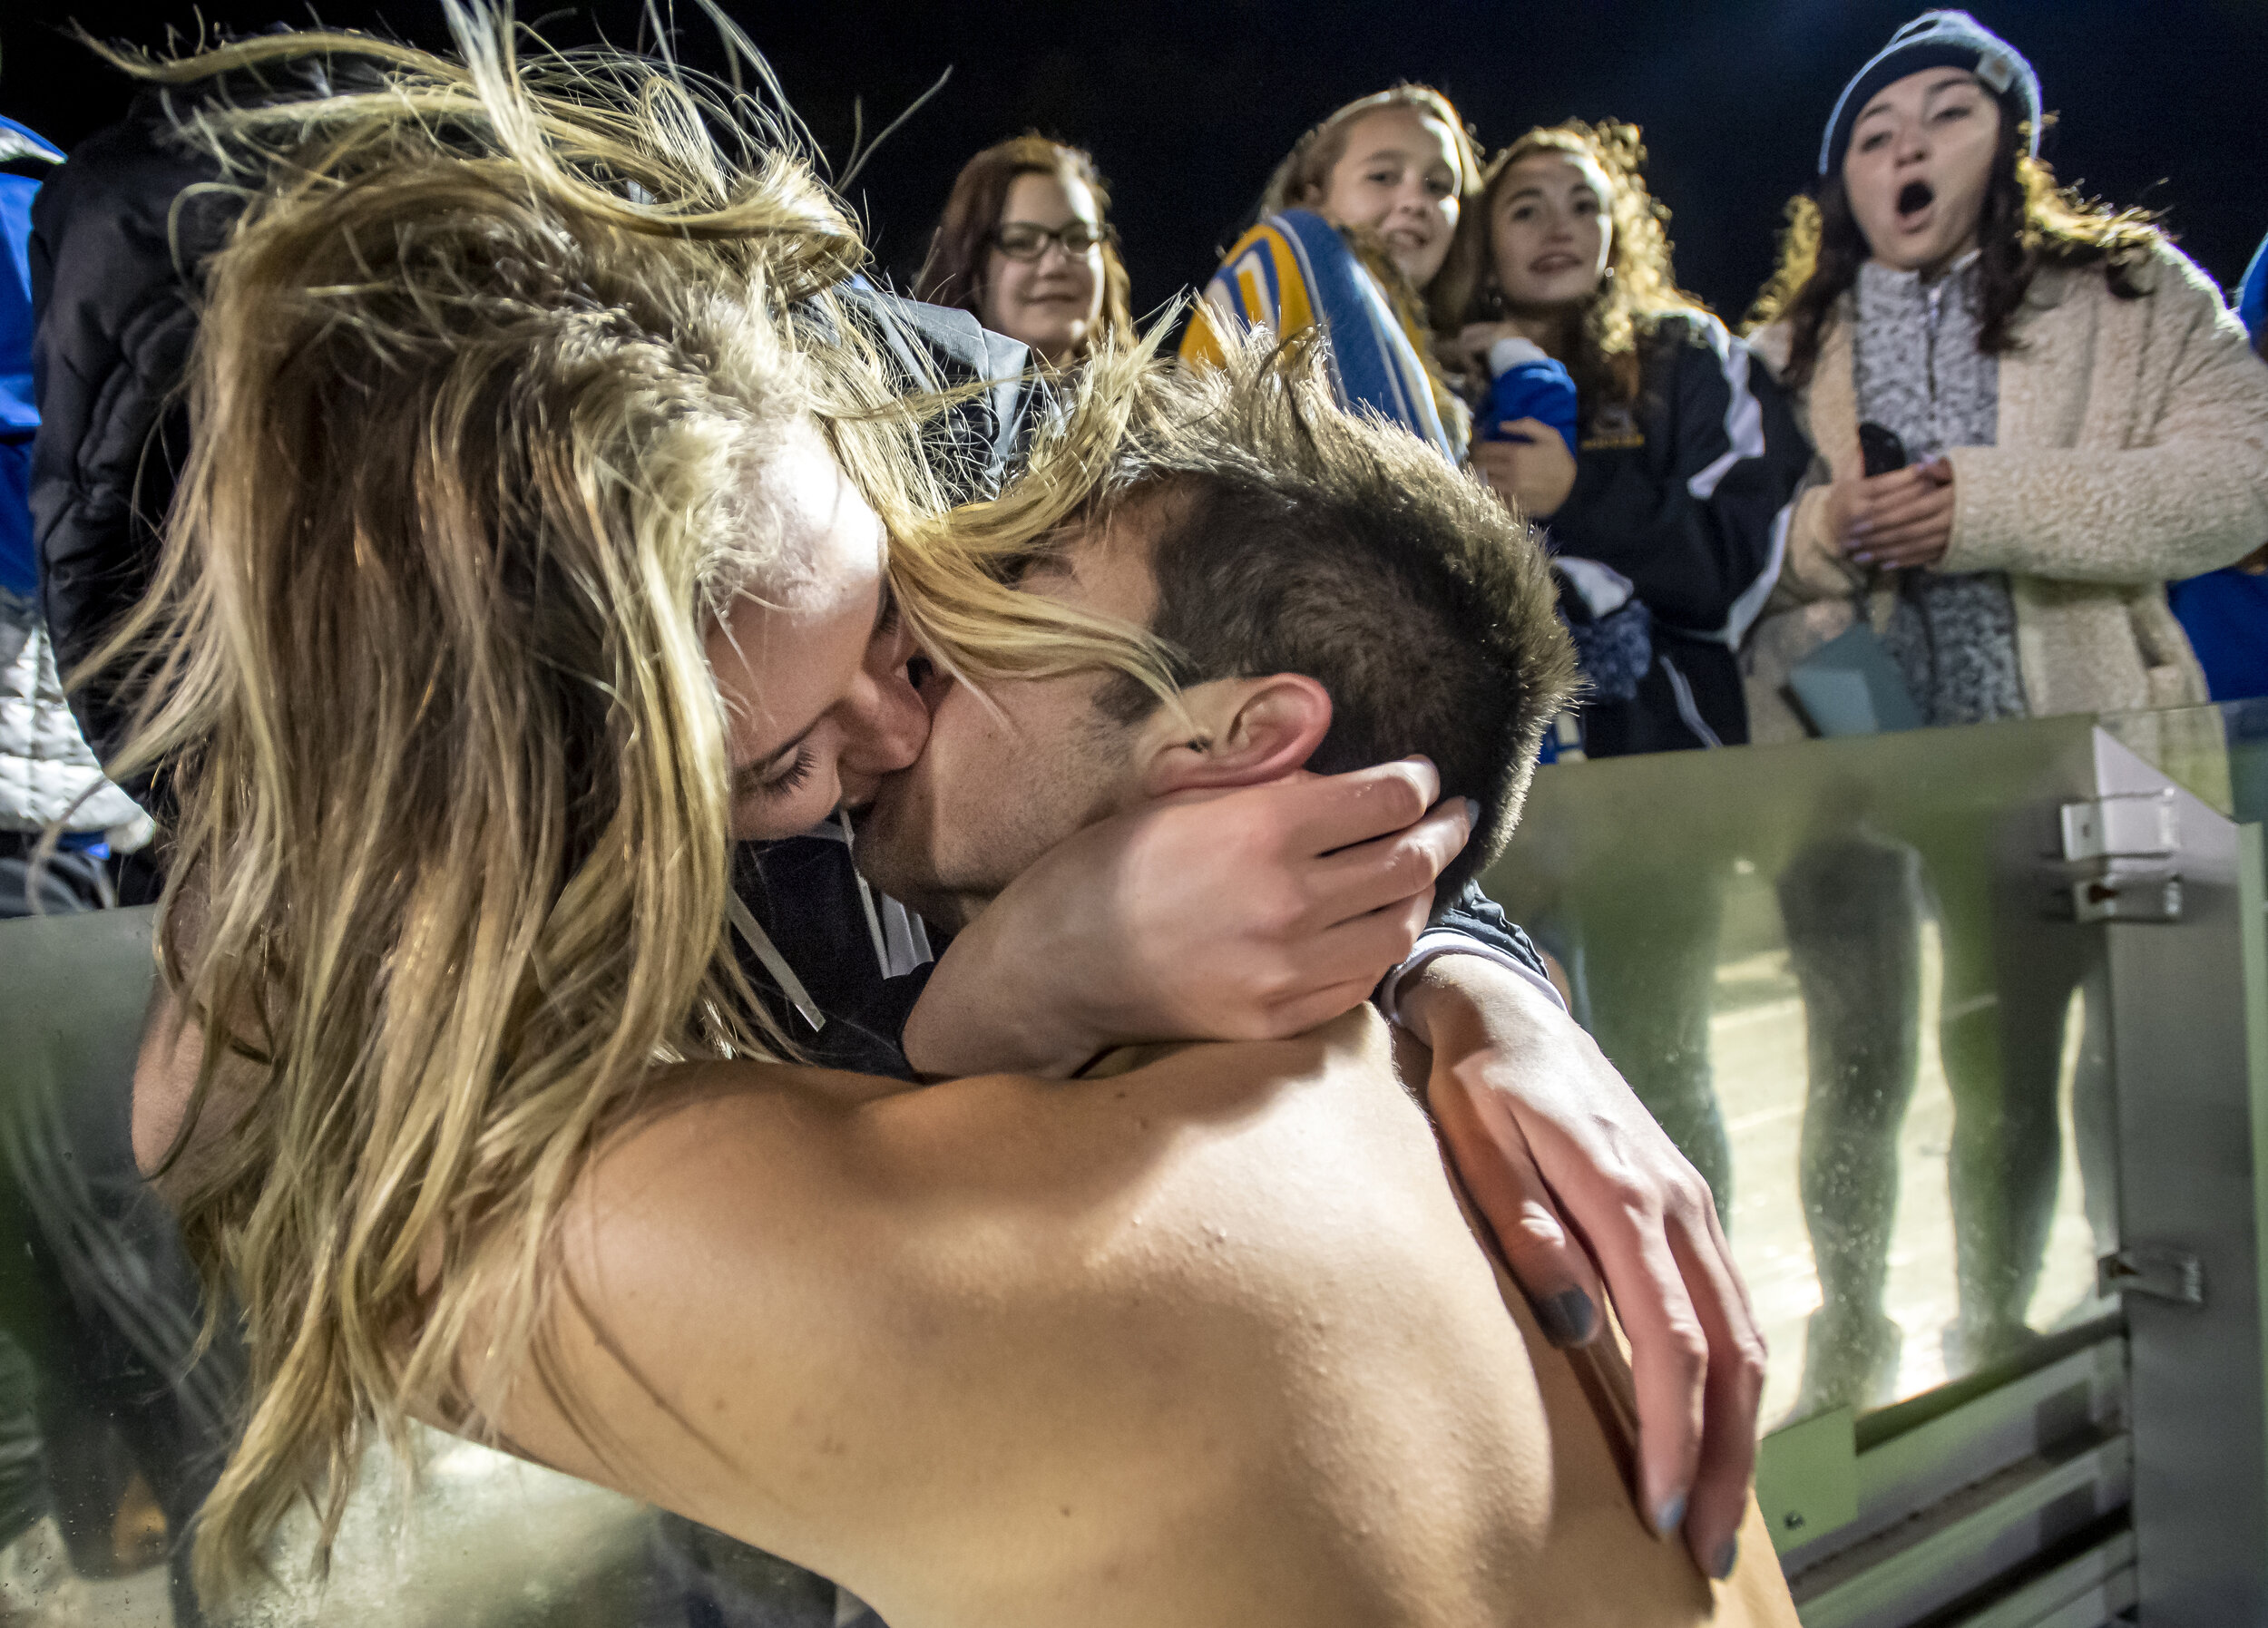  Cece Scott kisses her boyfriend Joseph Fonagy who scored the game-winning goal for Canon-McMillan against Mt. Lebanon during the WPIAL Class 4A soccer championship on Thursday, Oct. 31, 2019, at Highmark Stadium. Canon-McMillan beat Mt. Lebanon, 3-2